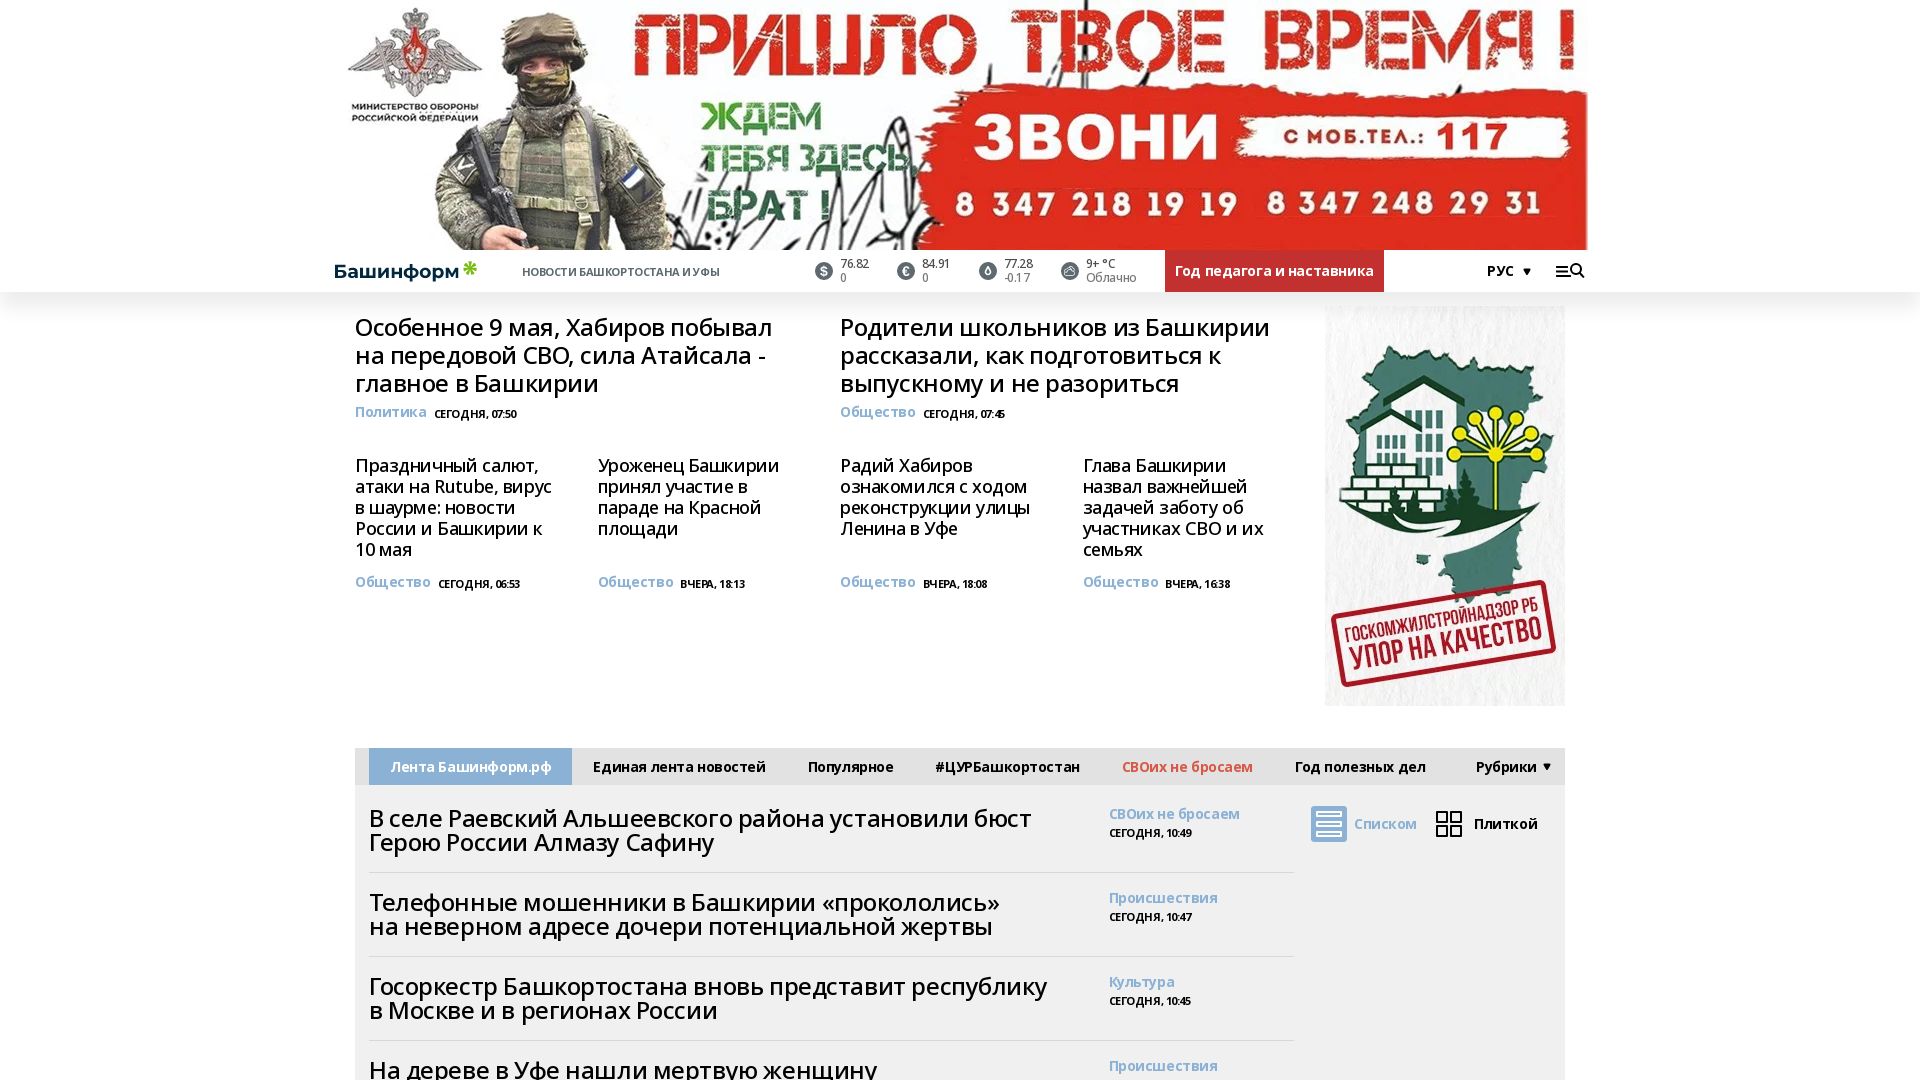 Estado web bashinform.ru está   ONLINE